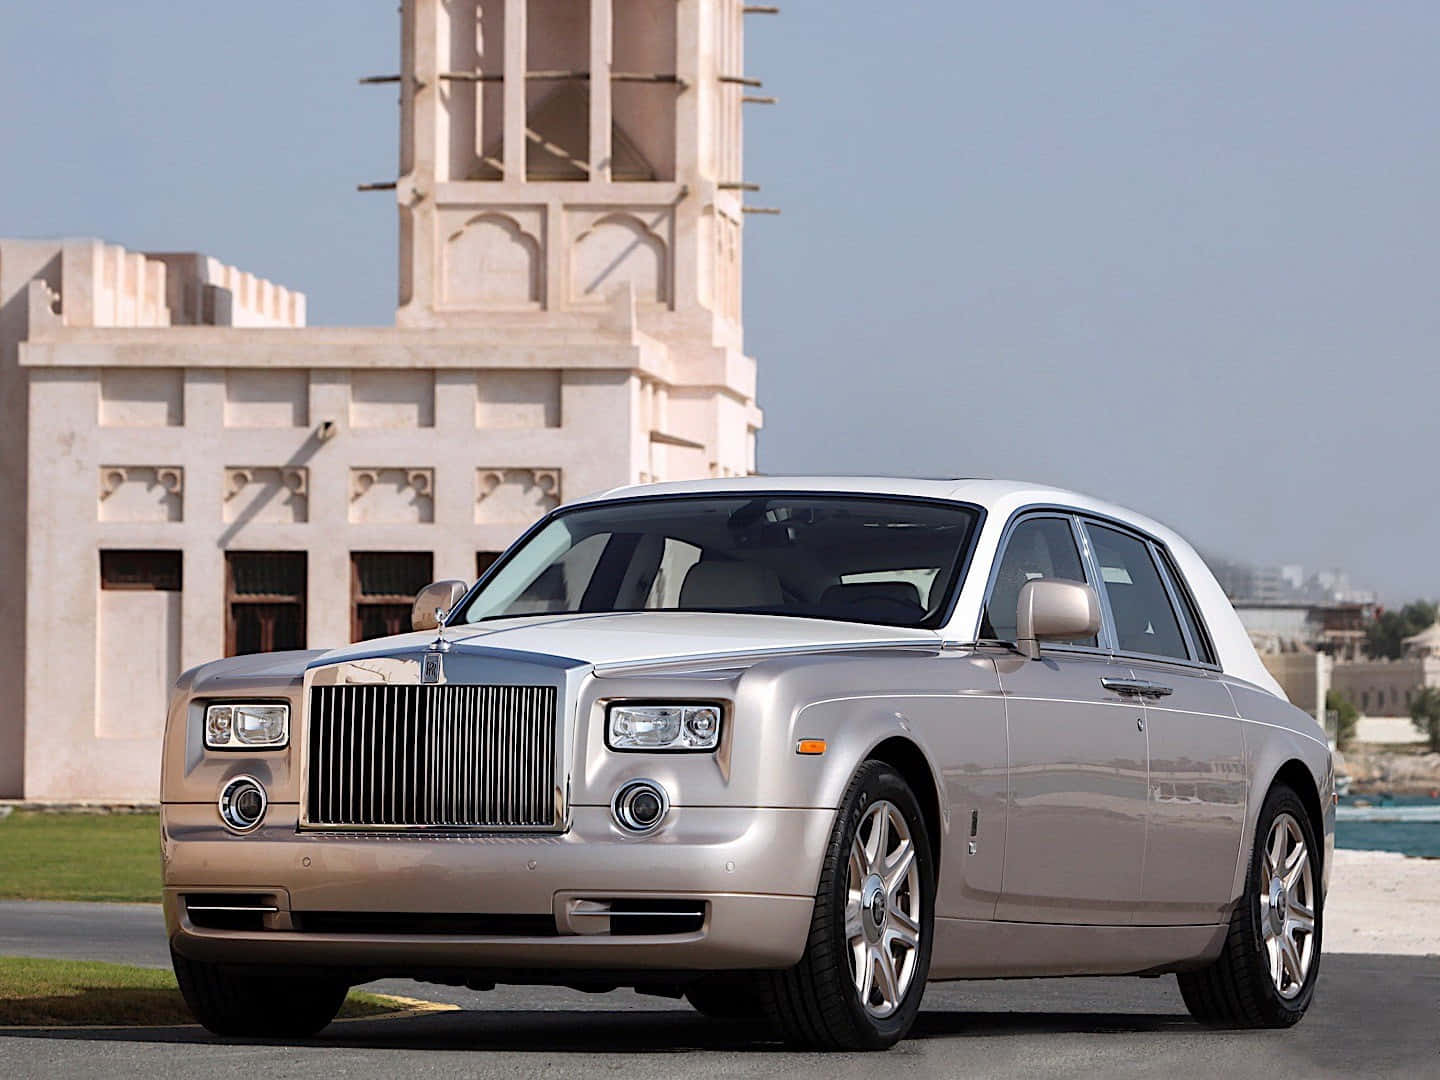 Breathtaking Luxury - The Rolls Royce Phantom Wallpaper